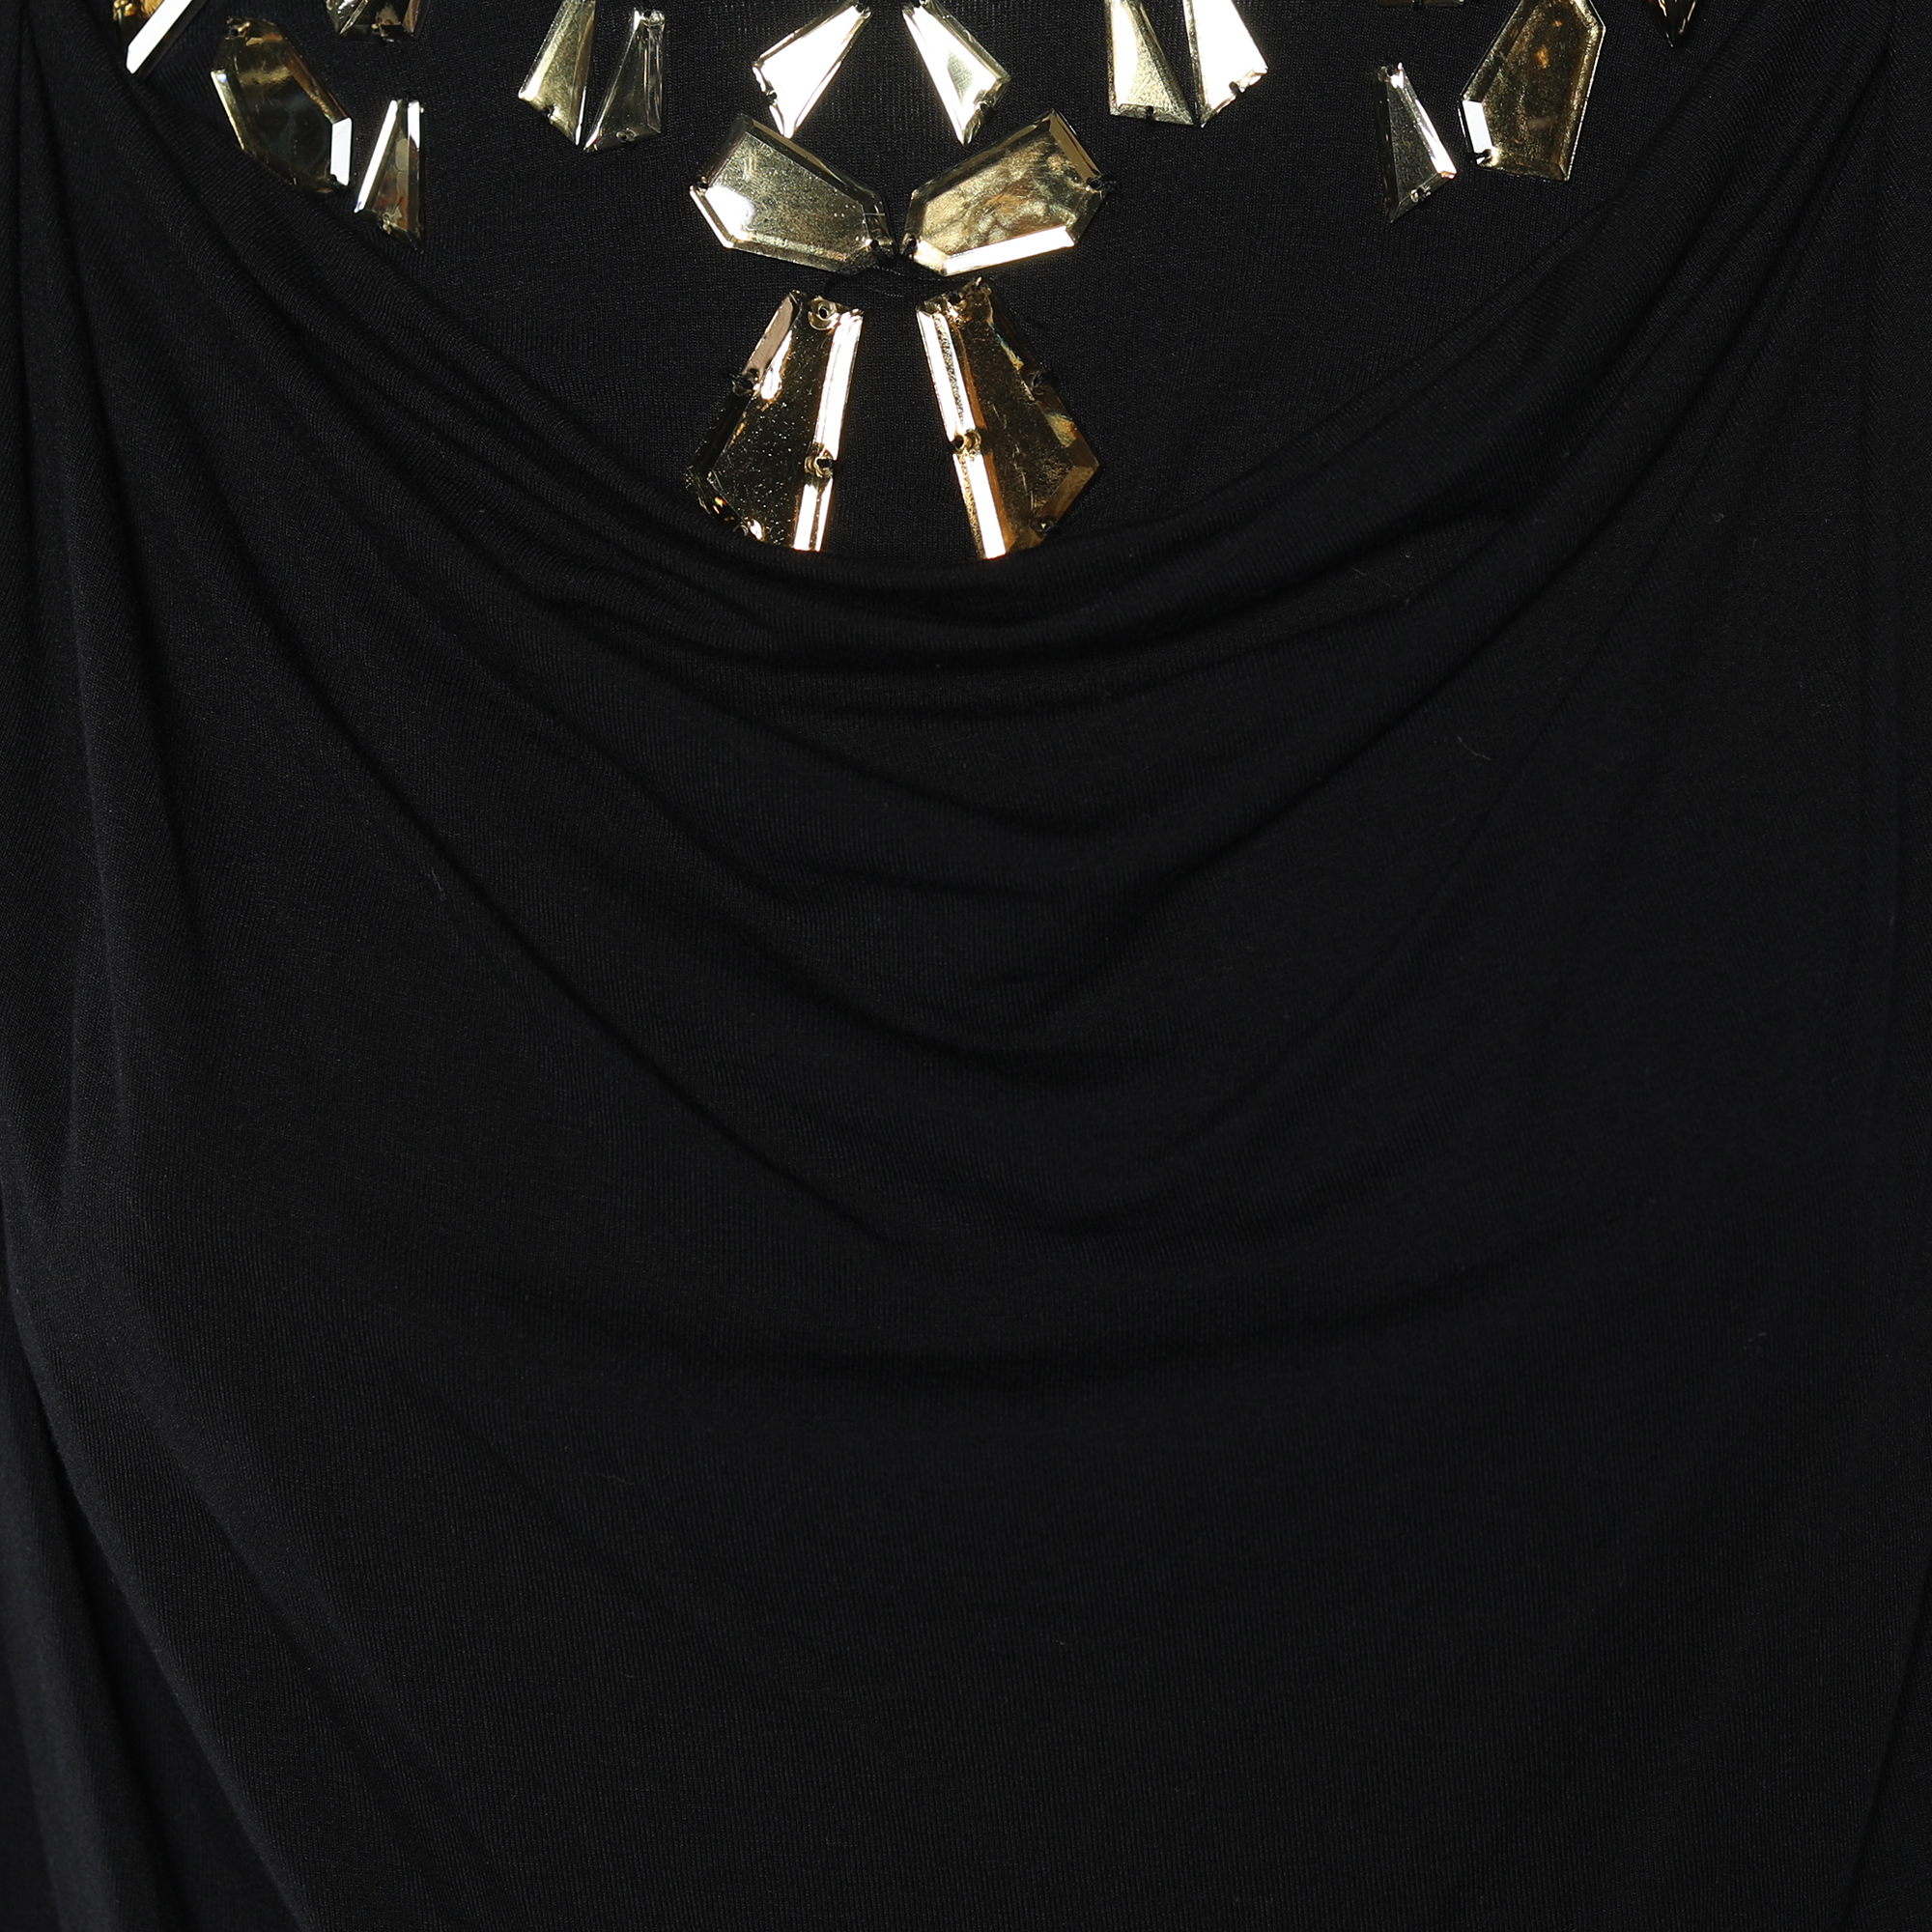 Givenchy Black Jersey Knit Crystal Embellished Blouse S